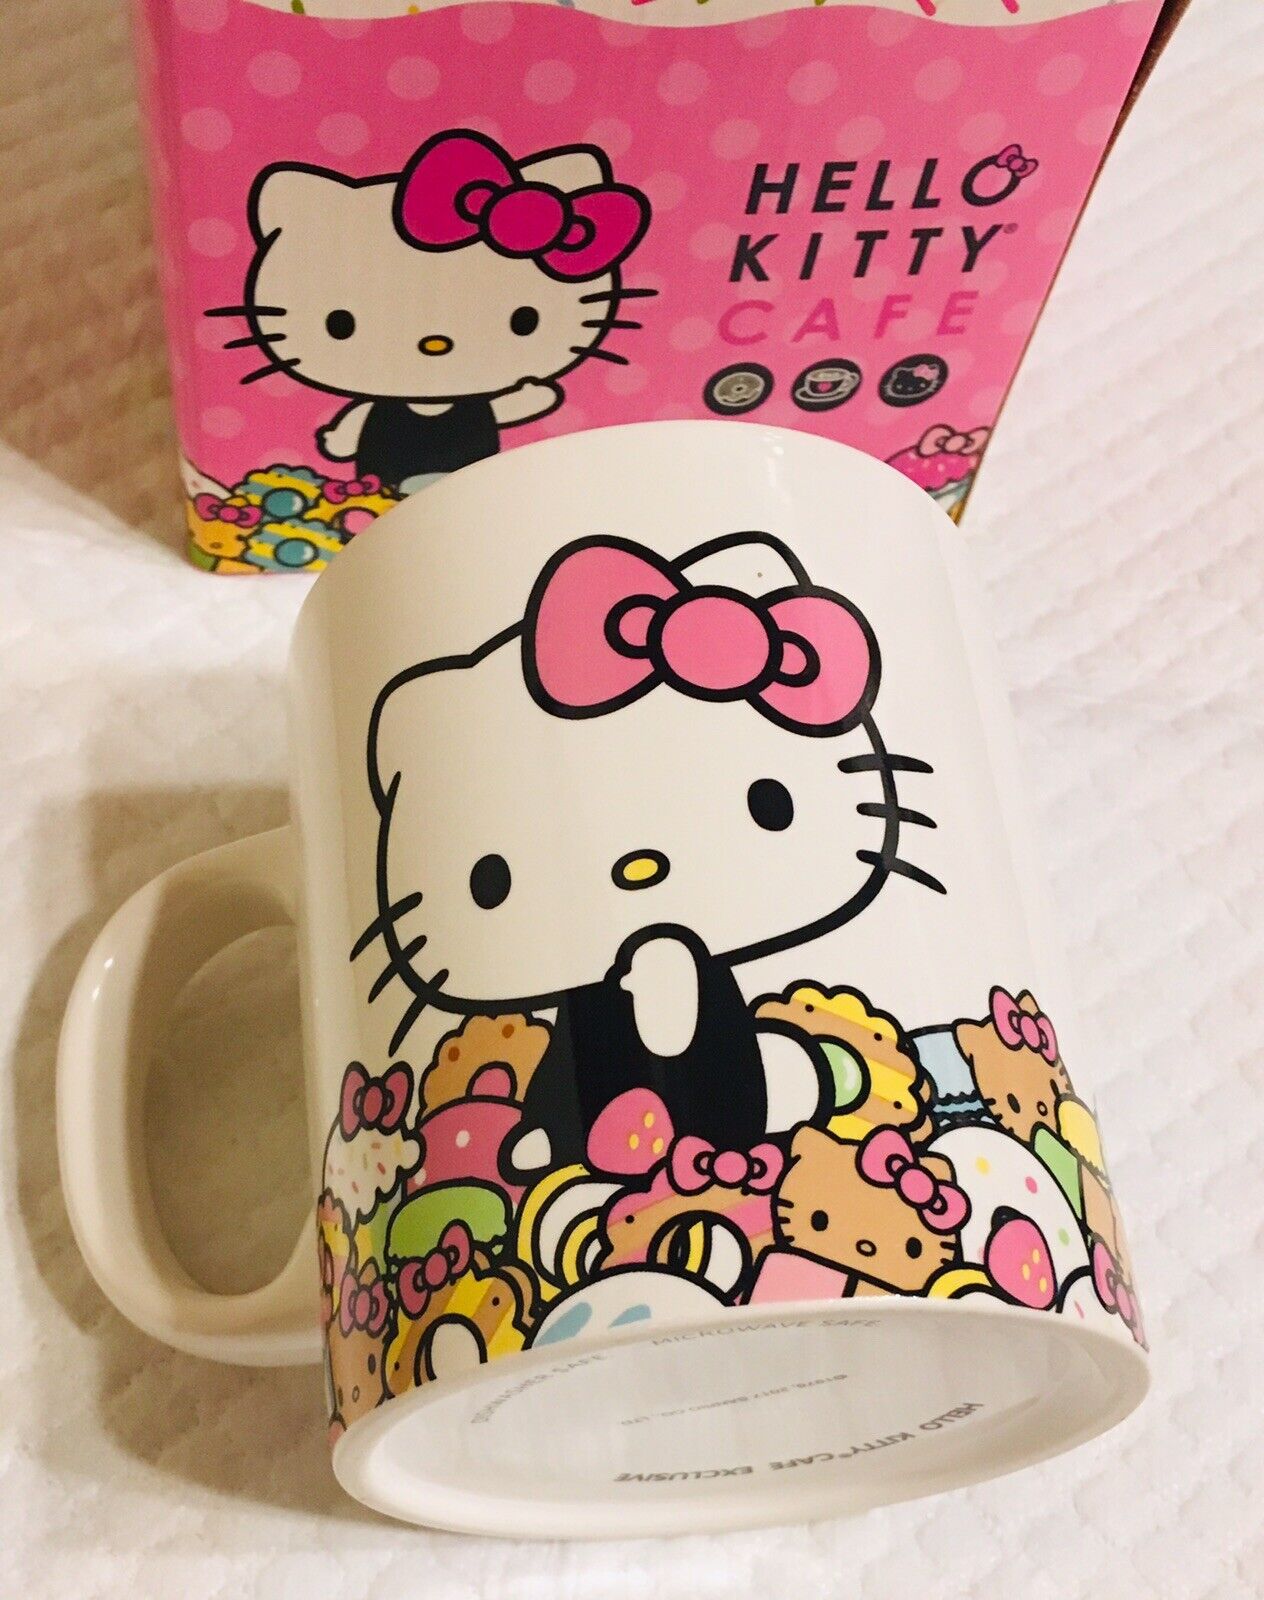 Adorable Sanrio Hello Kitty Cafe Ceramic Mug Exclusive Collectors New In Box